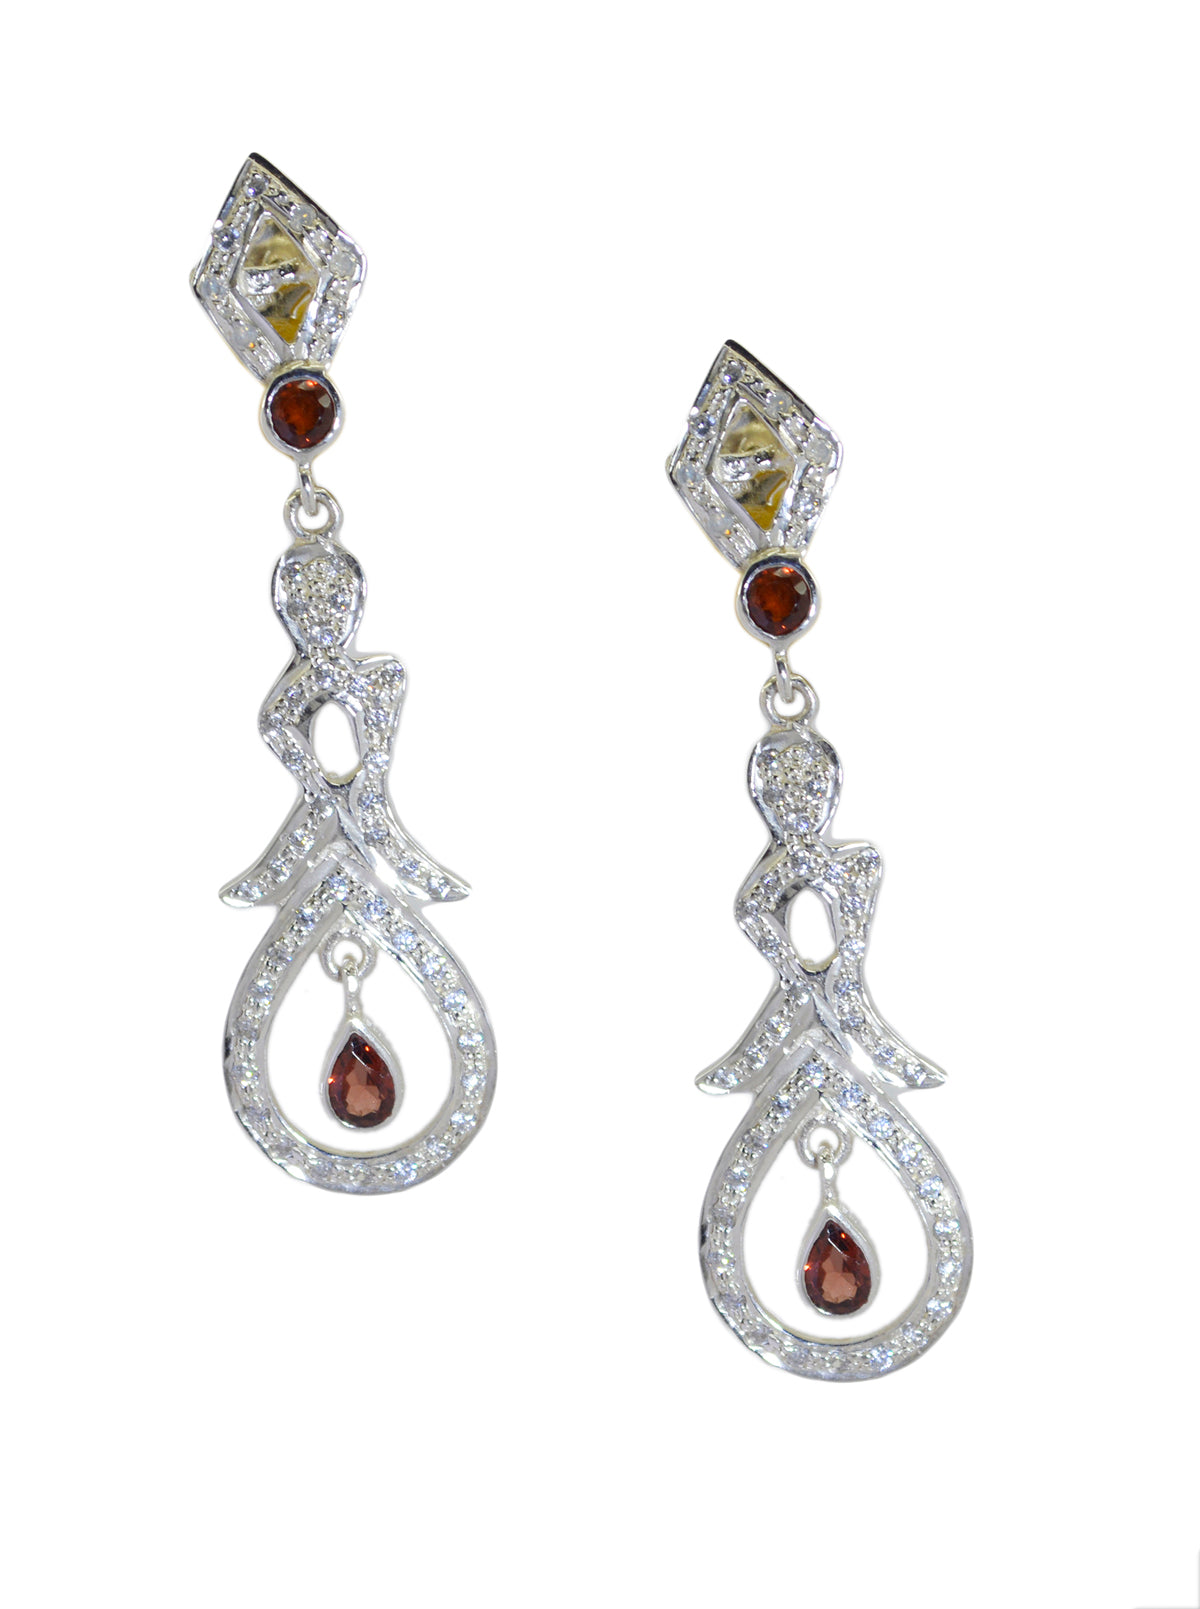 Riyo Nice Gemstone multi shape Faceted Red Garnet Silver Earring gift for friends